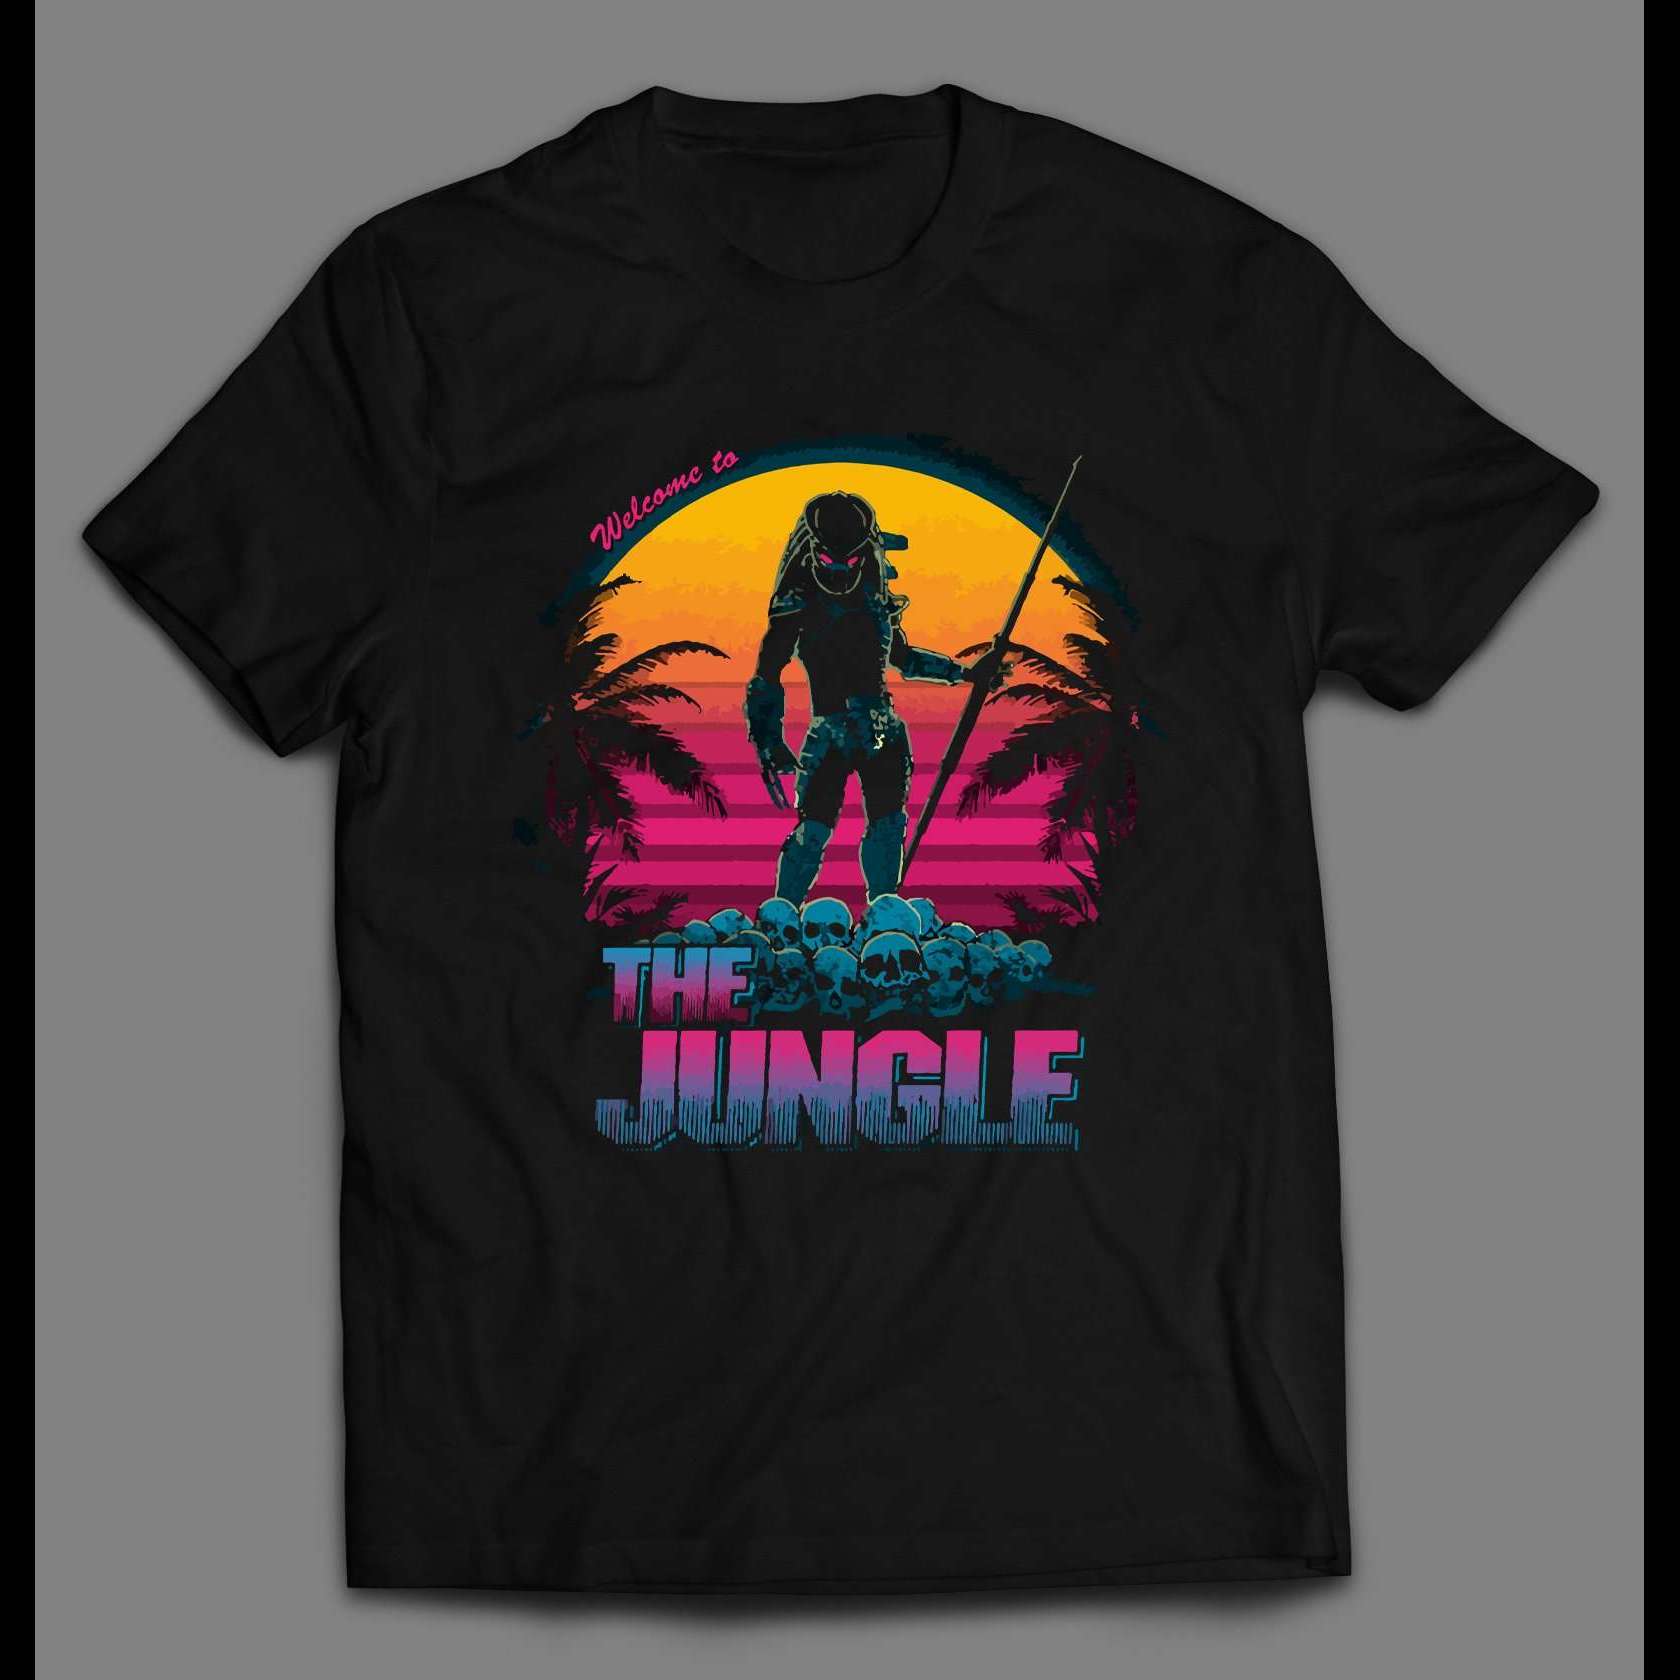 Predator welcome to the jungle we've got fun N games shirt, hoodie